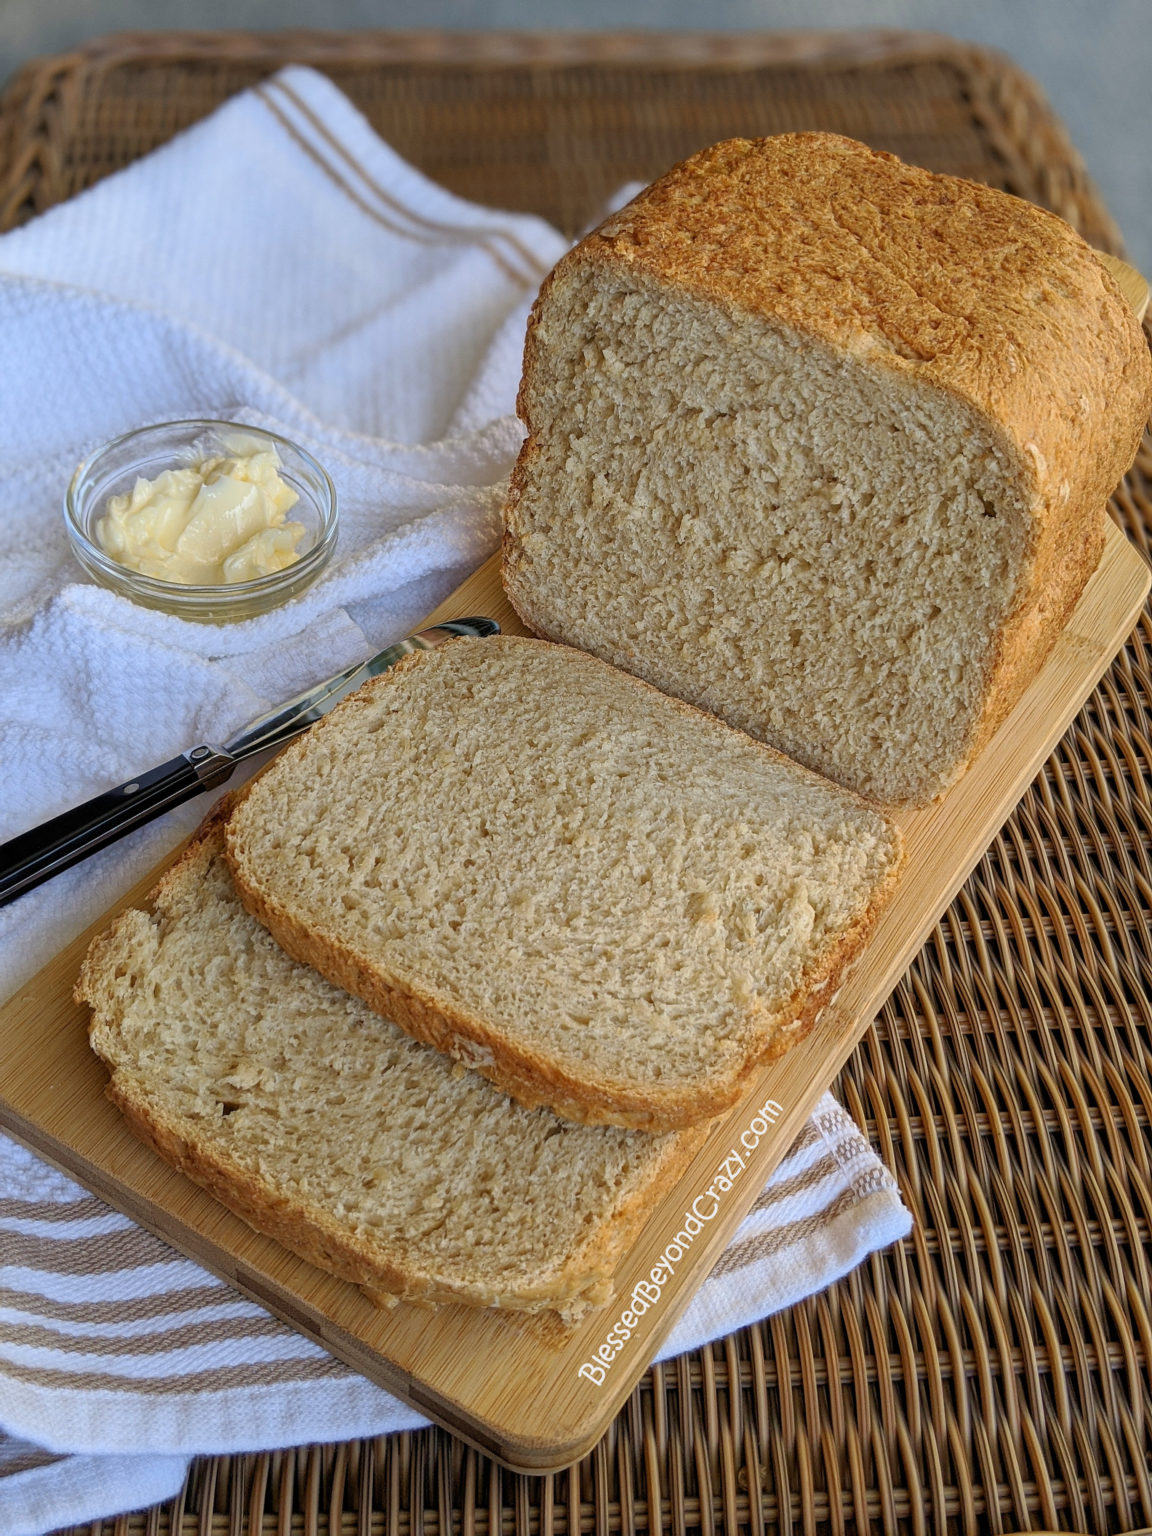 How to Make Homemade Oatmeal Yeast Bread